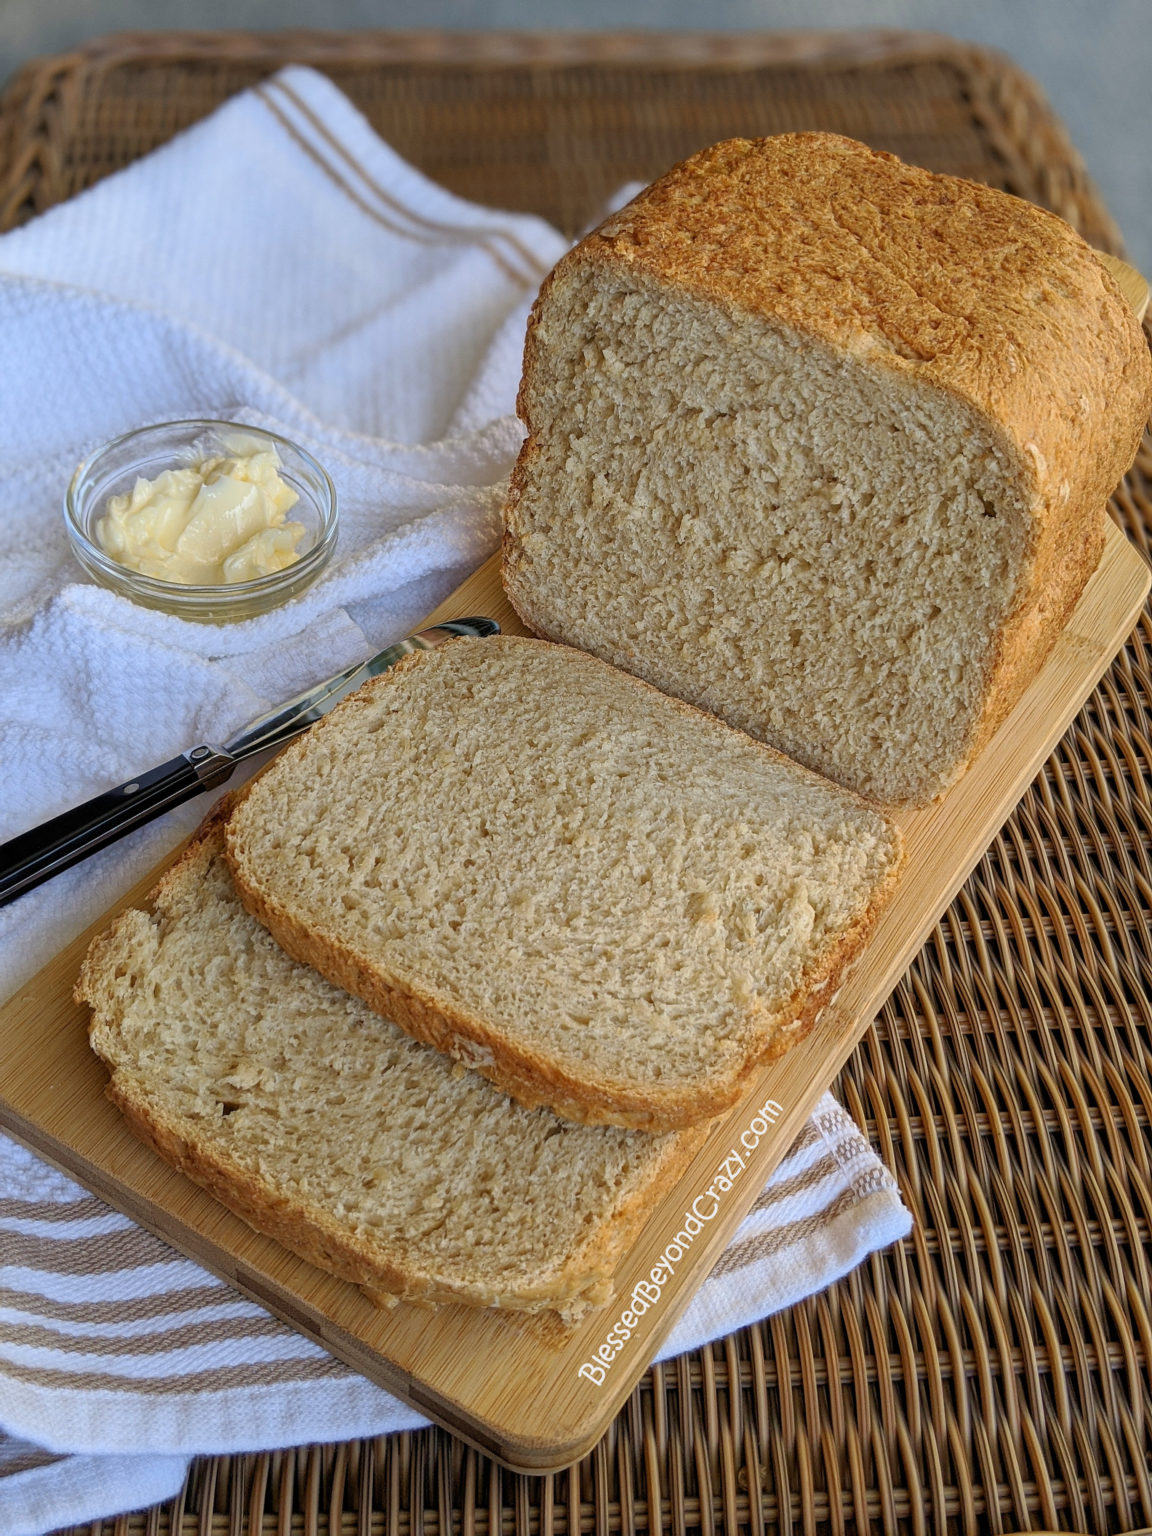 How to Make Homemade Oatmeal Yeast Bread